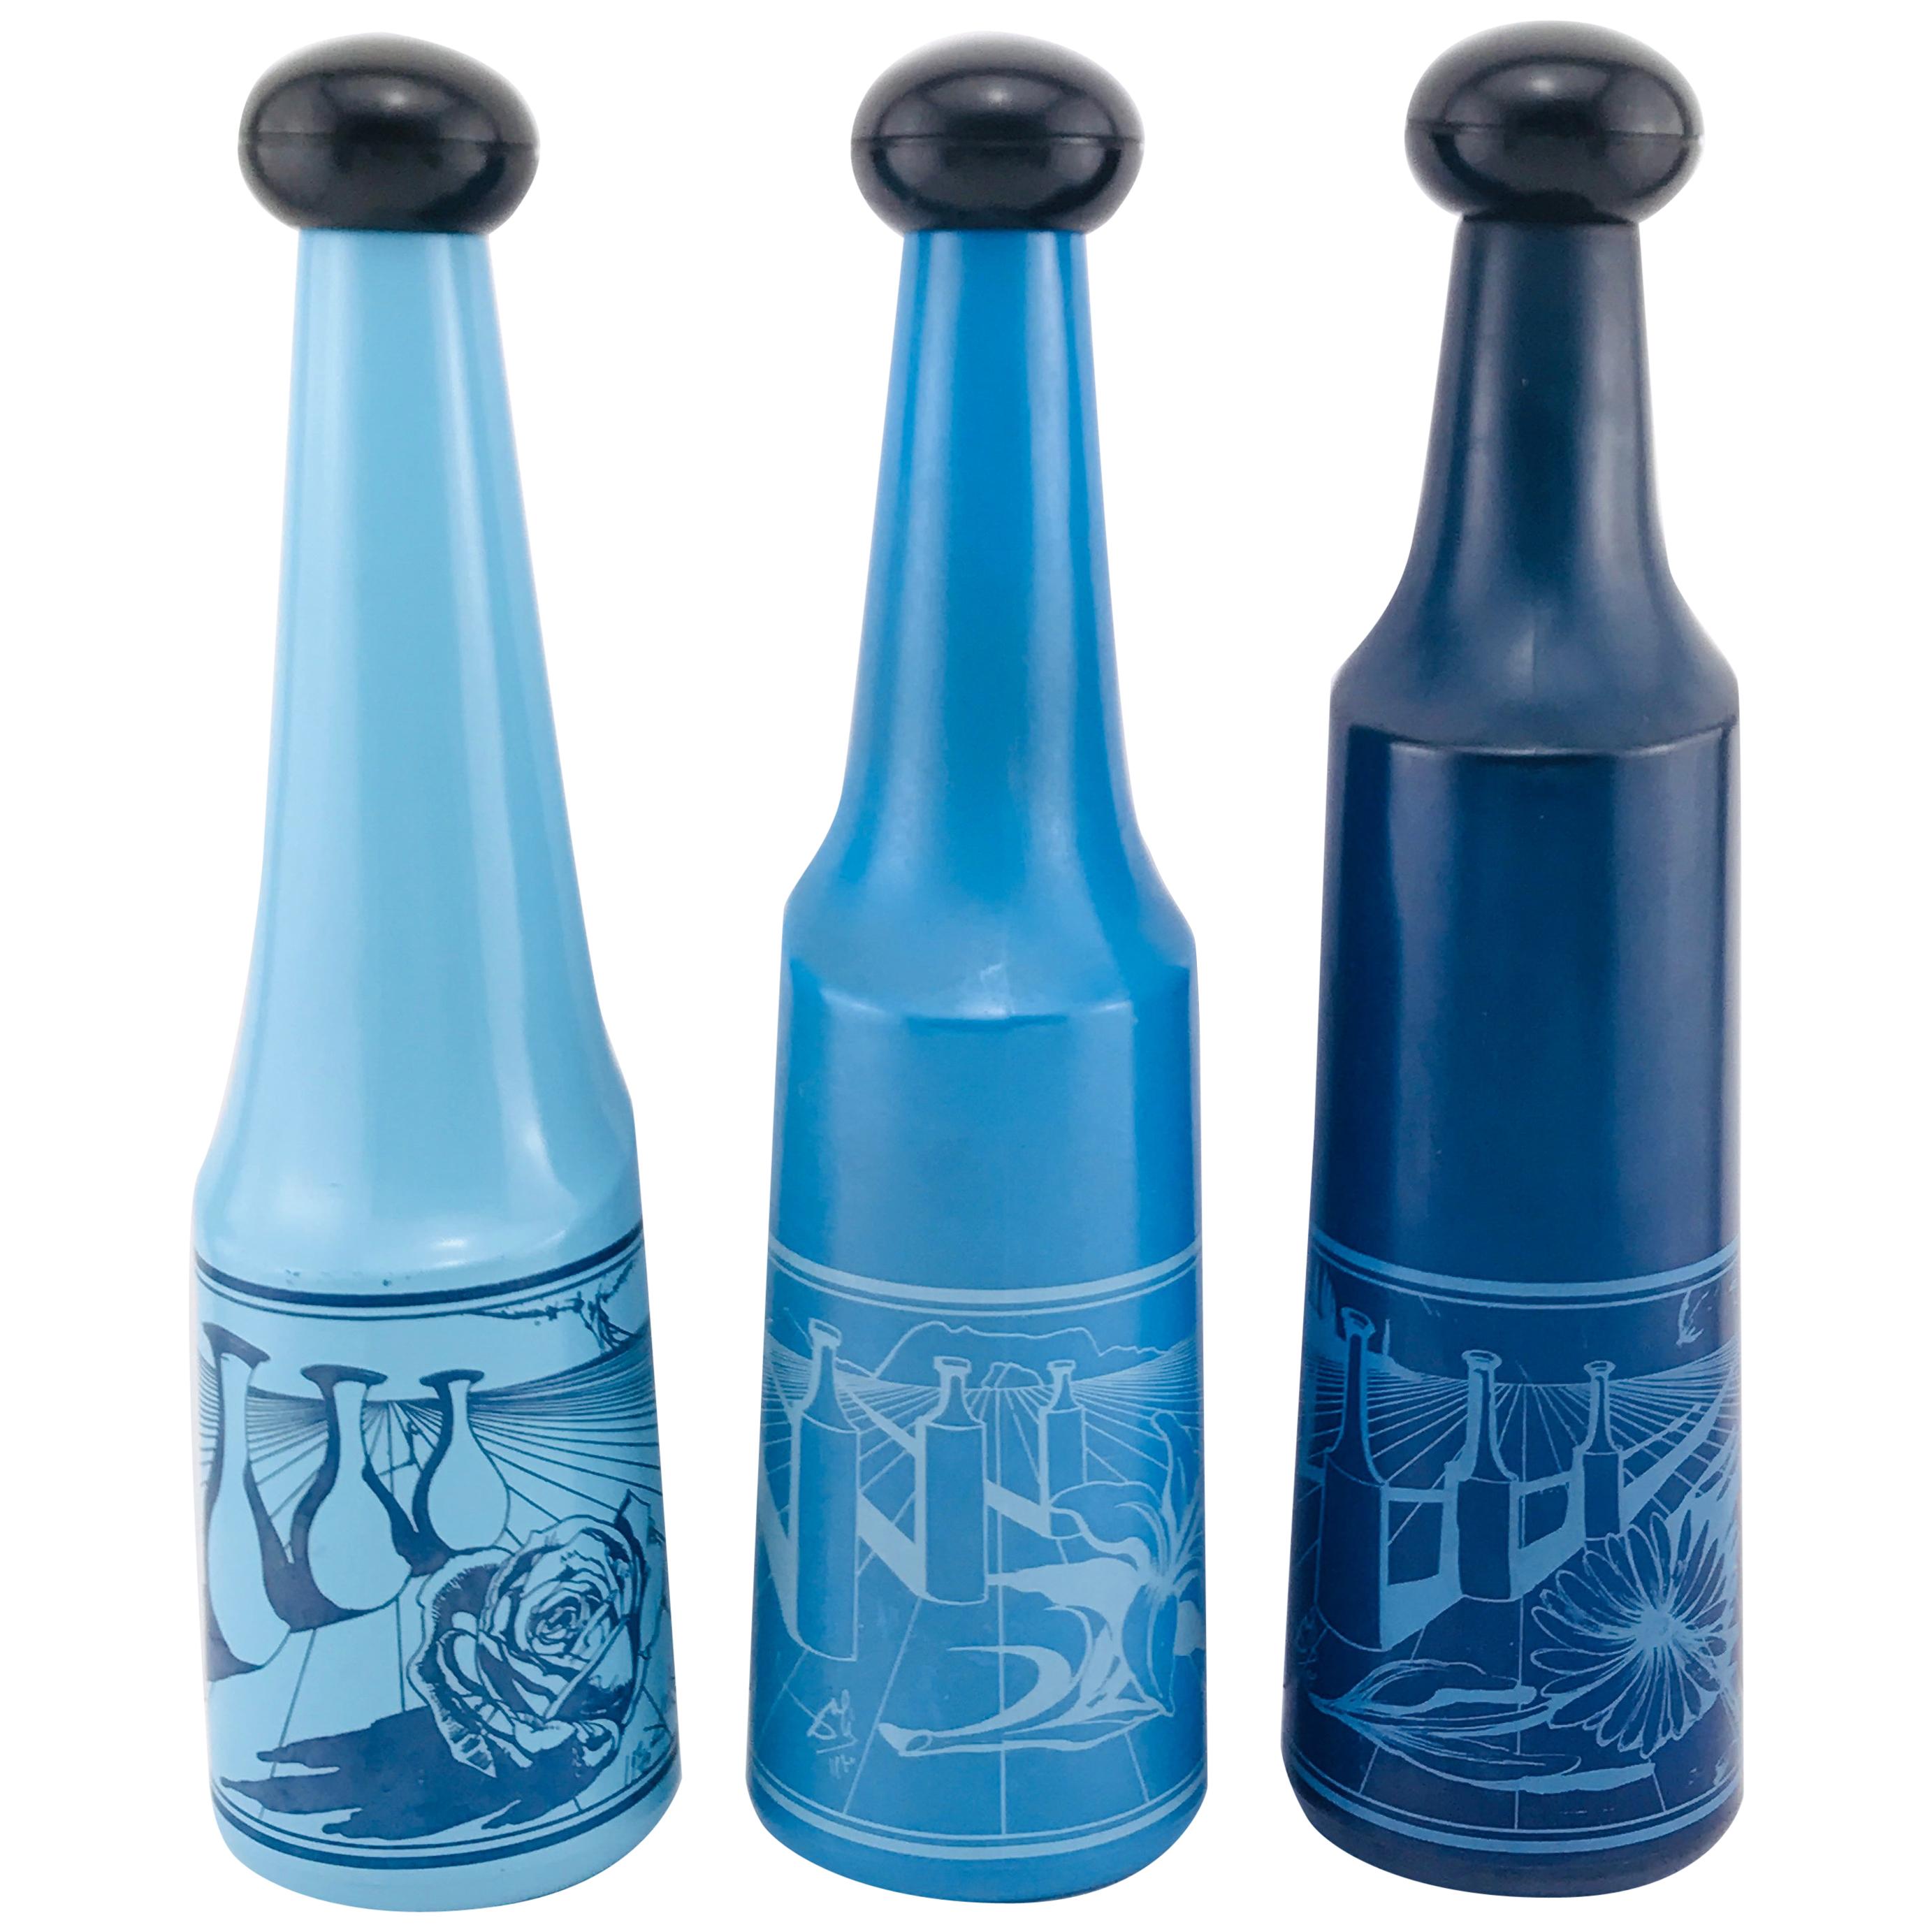 Salvador Dali for Rosso Antico Surrealist Design Glass Bottles, Signed, 1970s